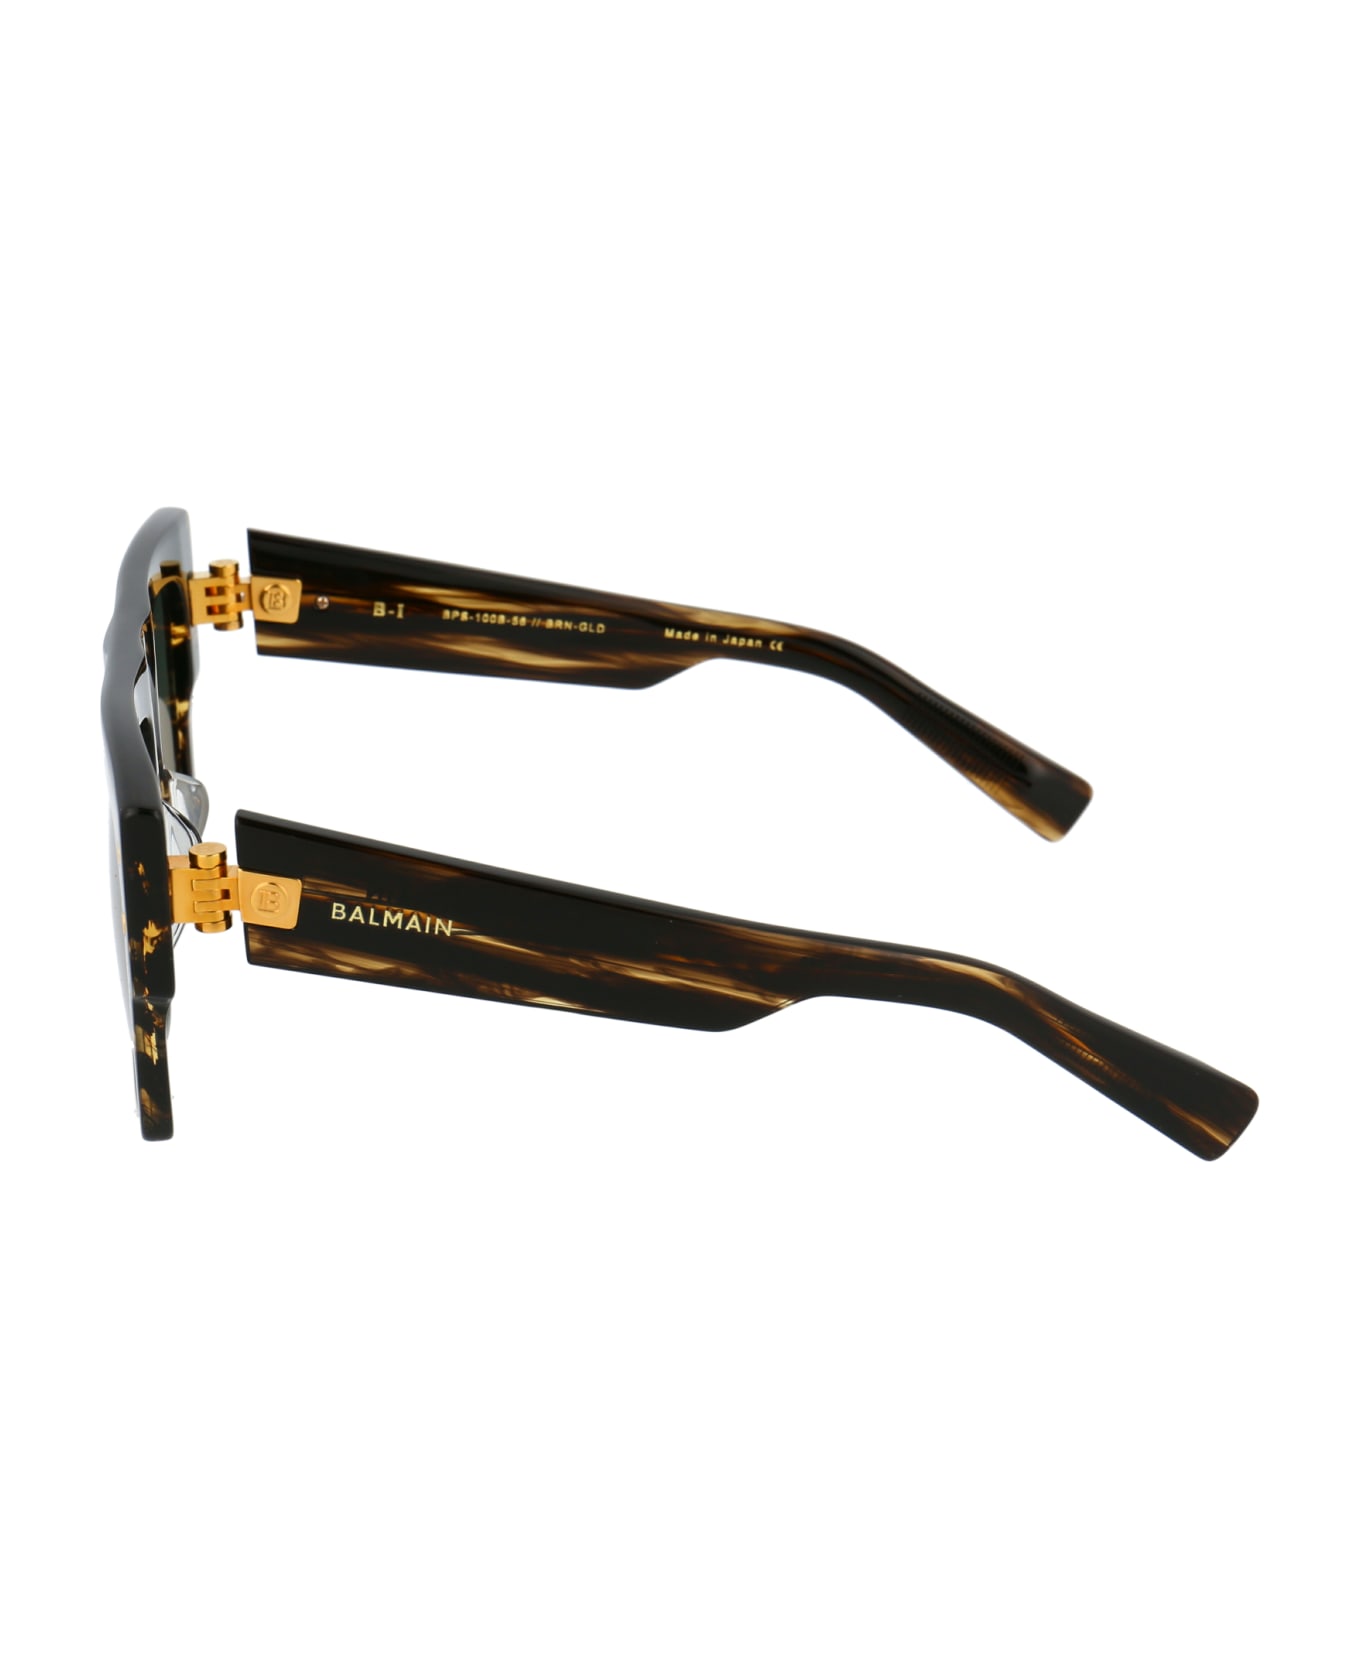 Balmain B-i Sunglasses - DARK BROWN SWIRL GOLD W/G 15 AR サングラス